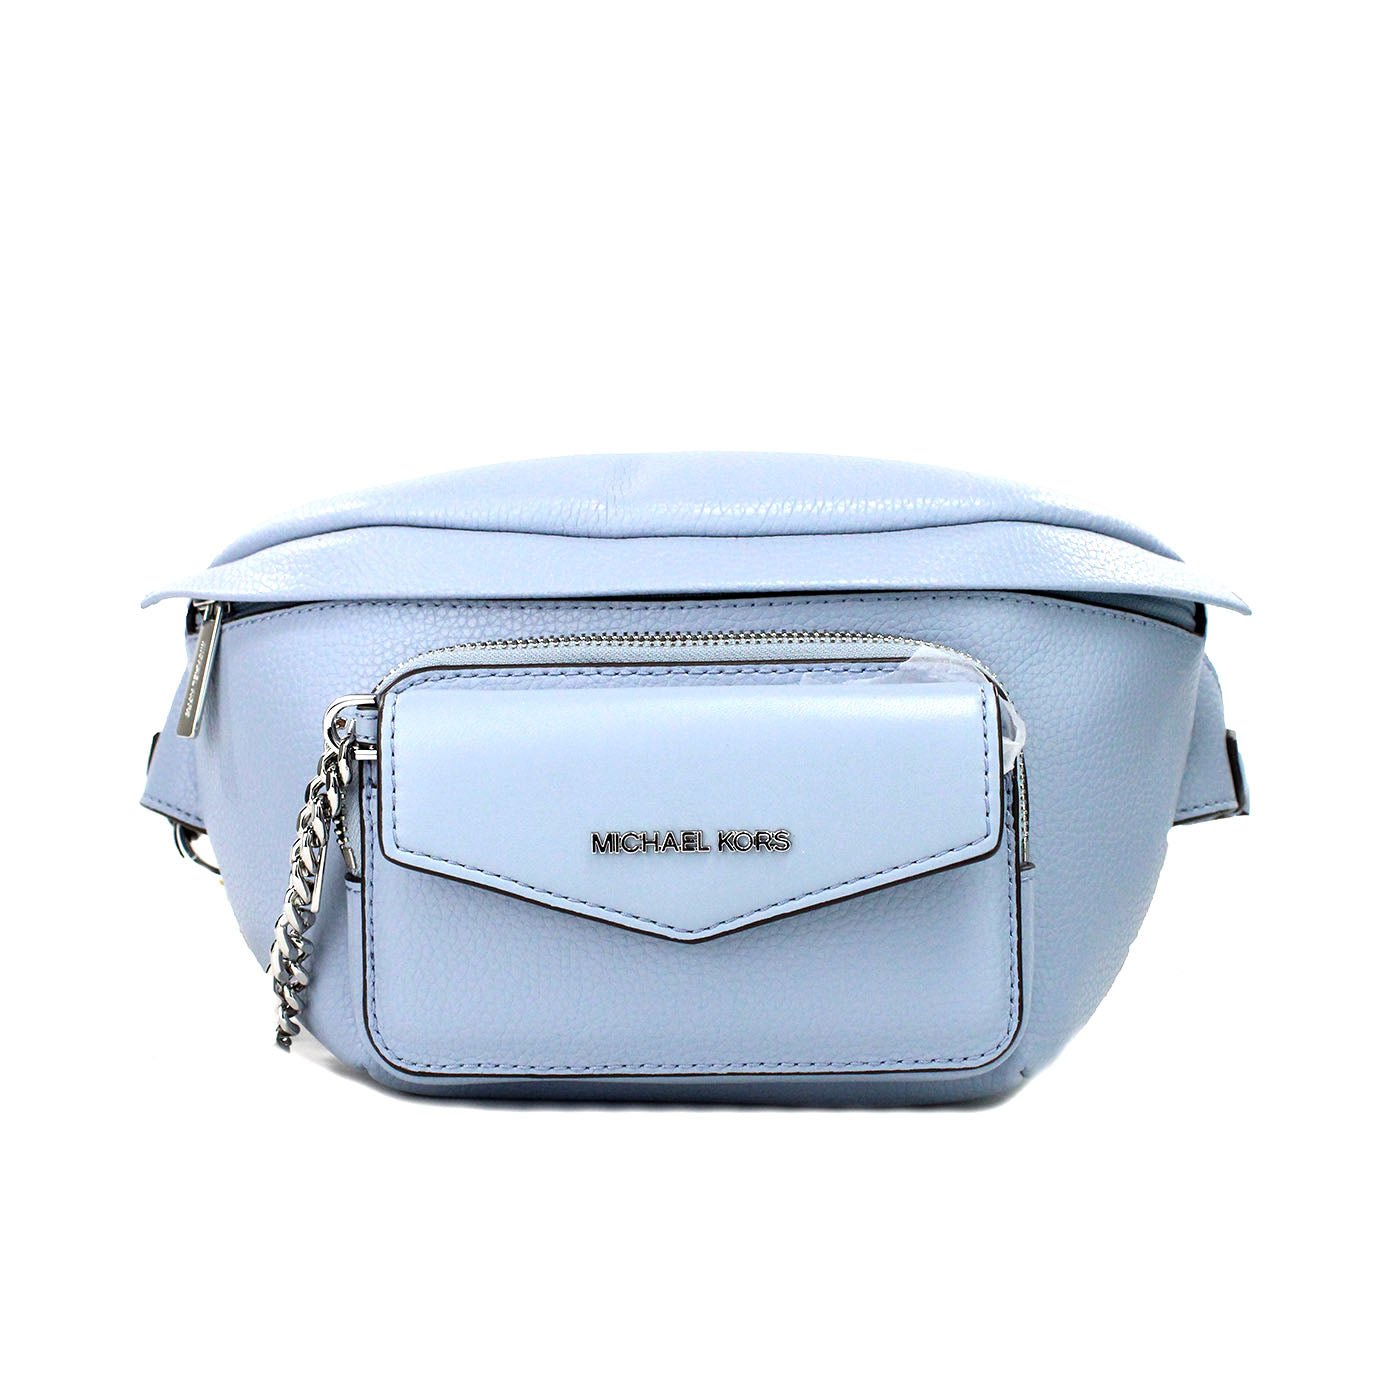 Fashionsarah.com Fashionsarah.com Michael Kors Maisie Large Pale Blue 2-n-1 Waistpack Card Case Fanny Pack Bag